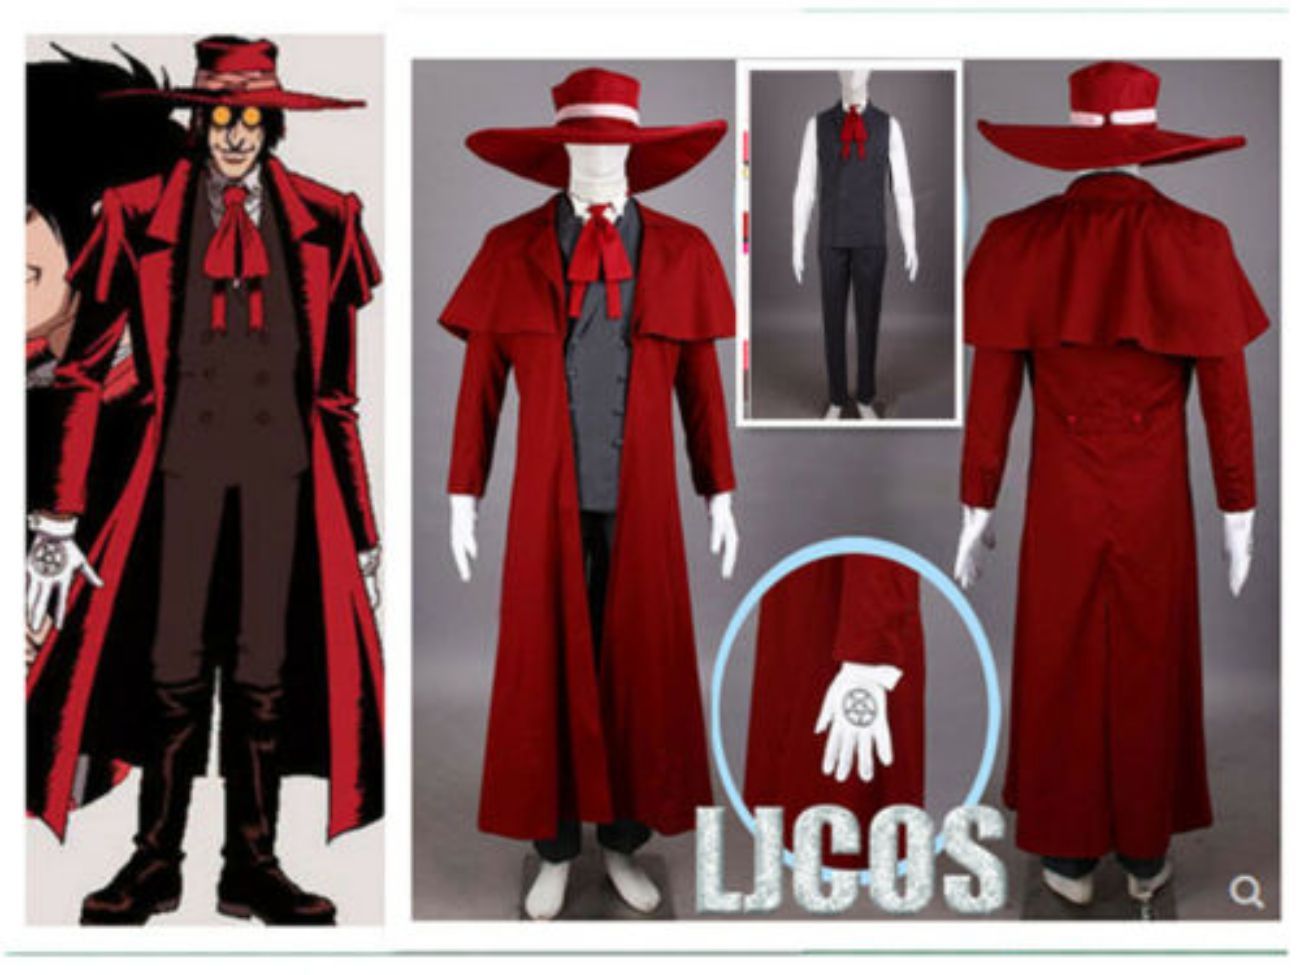 Anime Hellsing Alucard cosplay costume long cloak Jacket Suit for